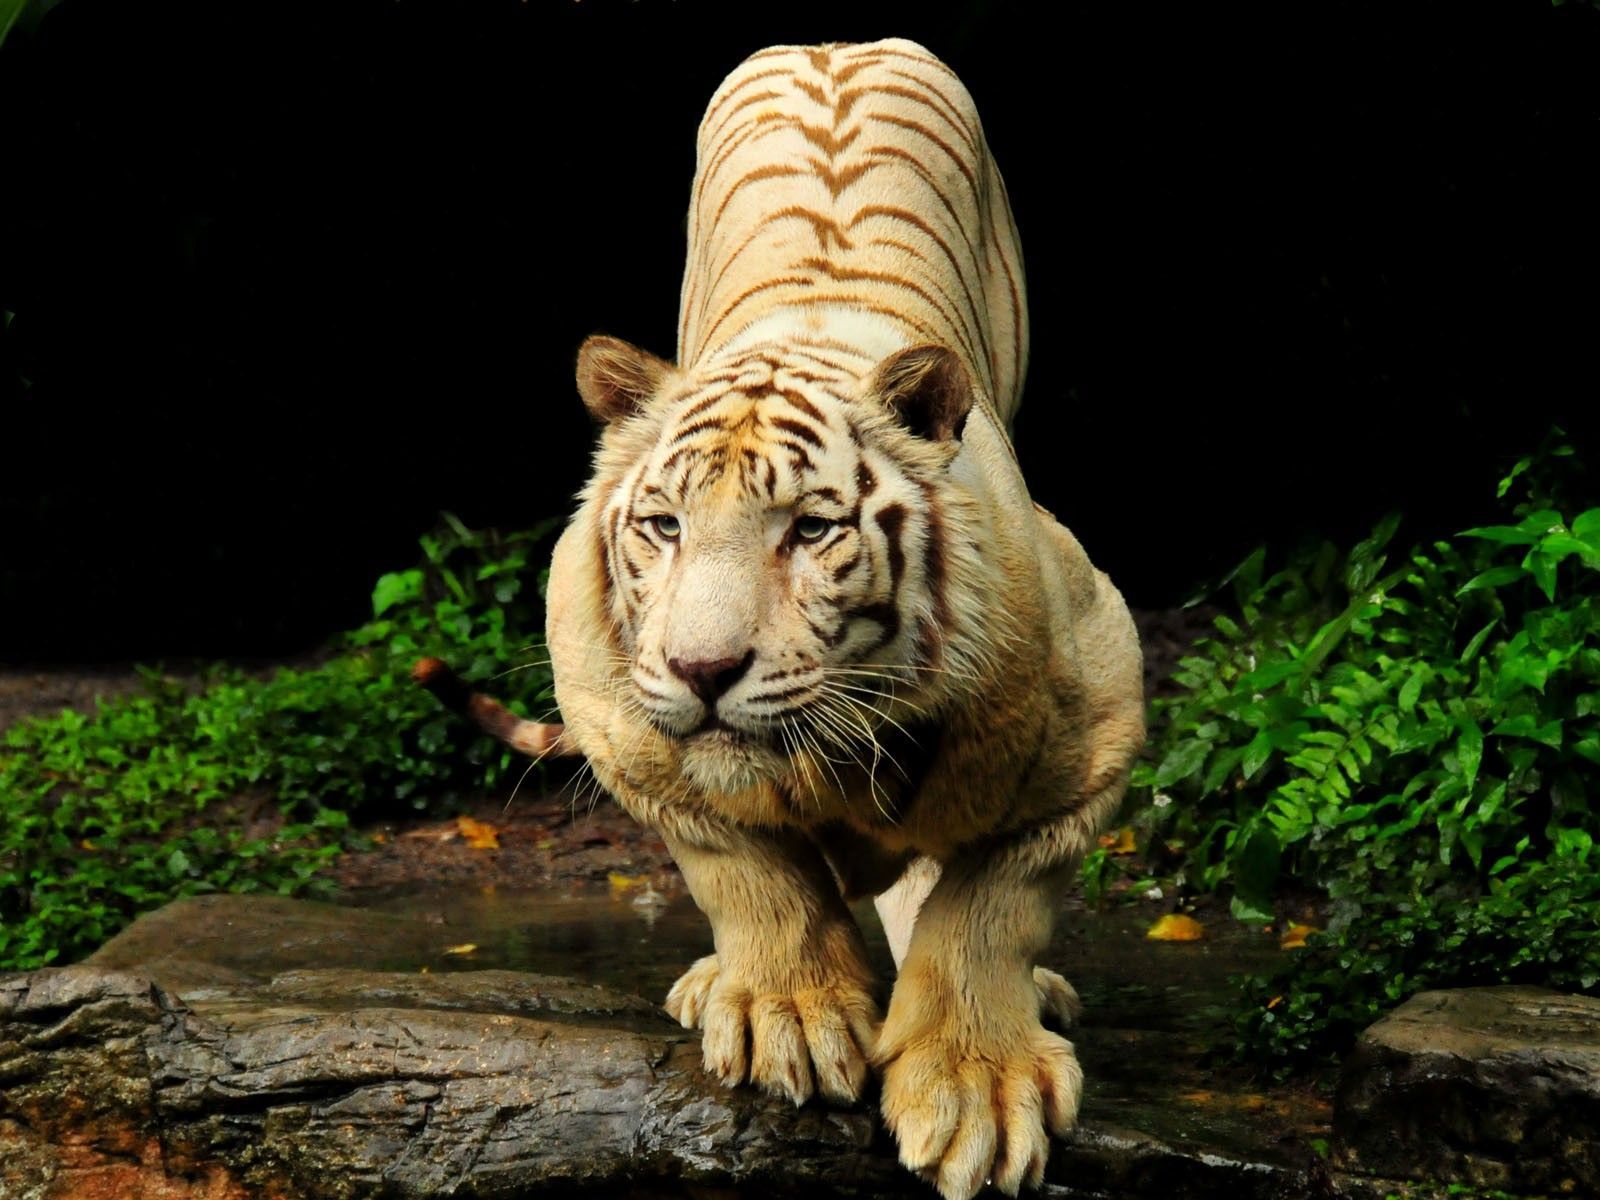 Tiger Desktop Wallpapers | Tiger Images Free Download | Cool ...